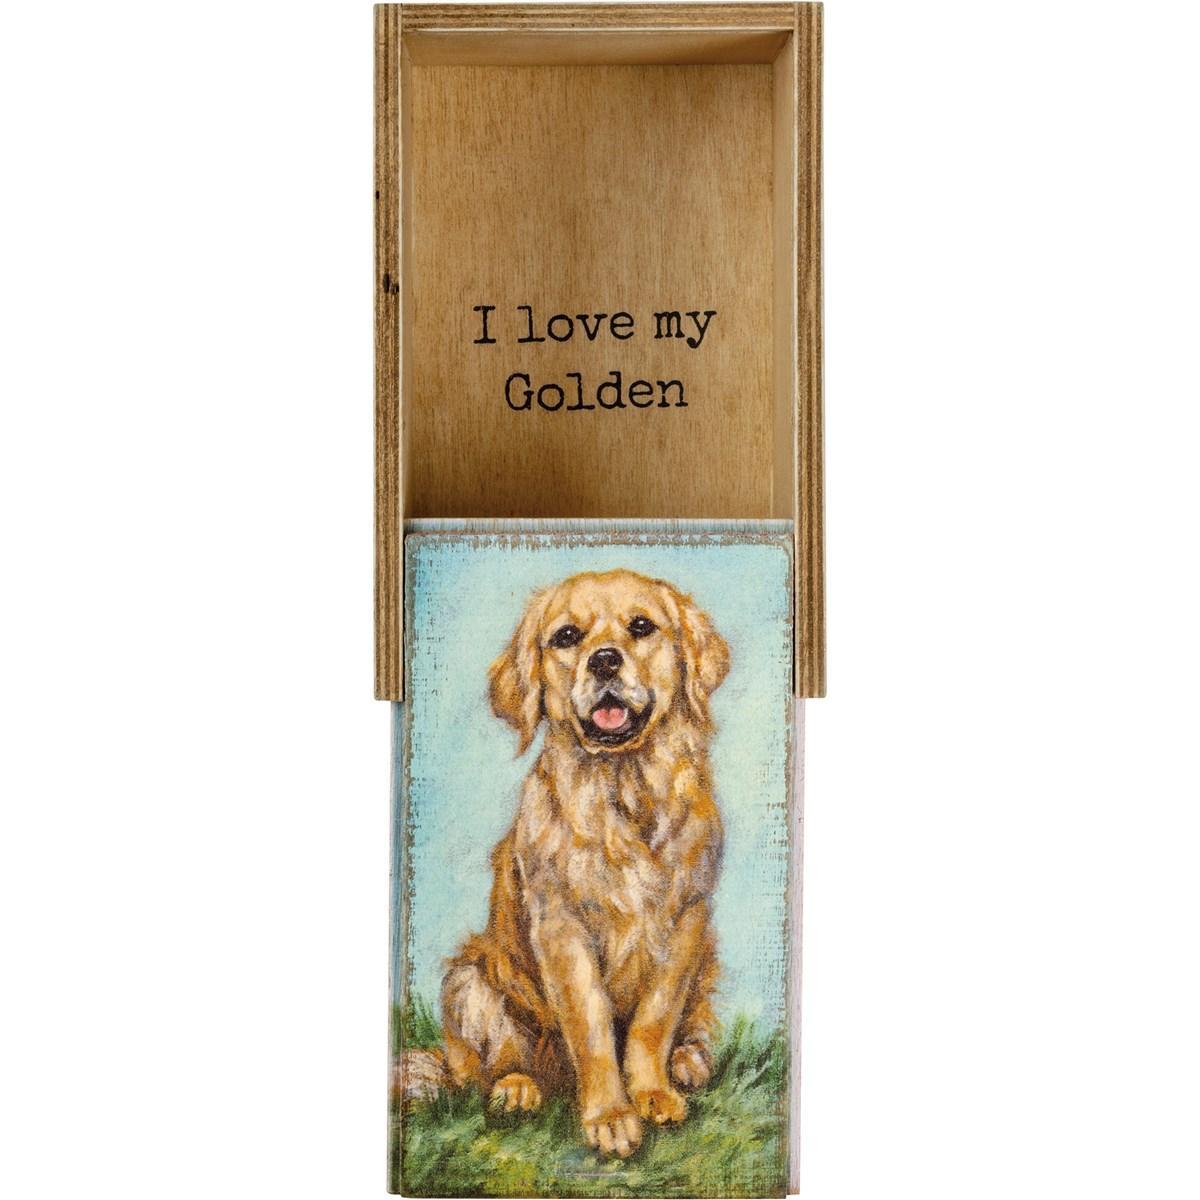 I Love My Golden Keepsake Box